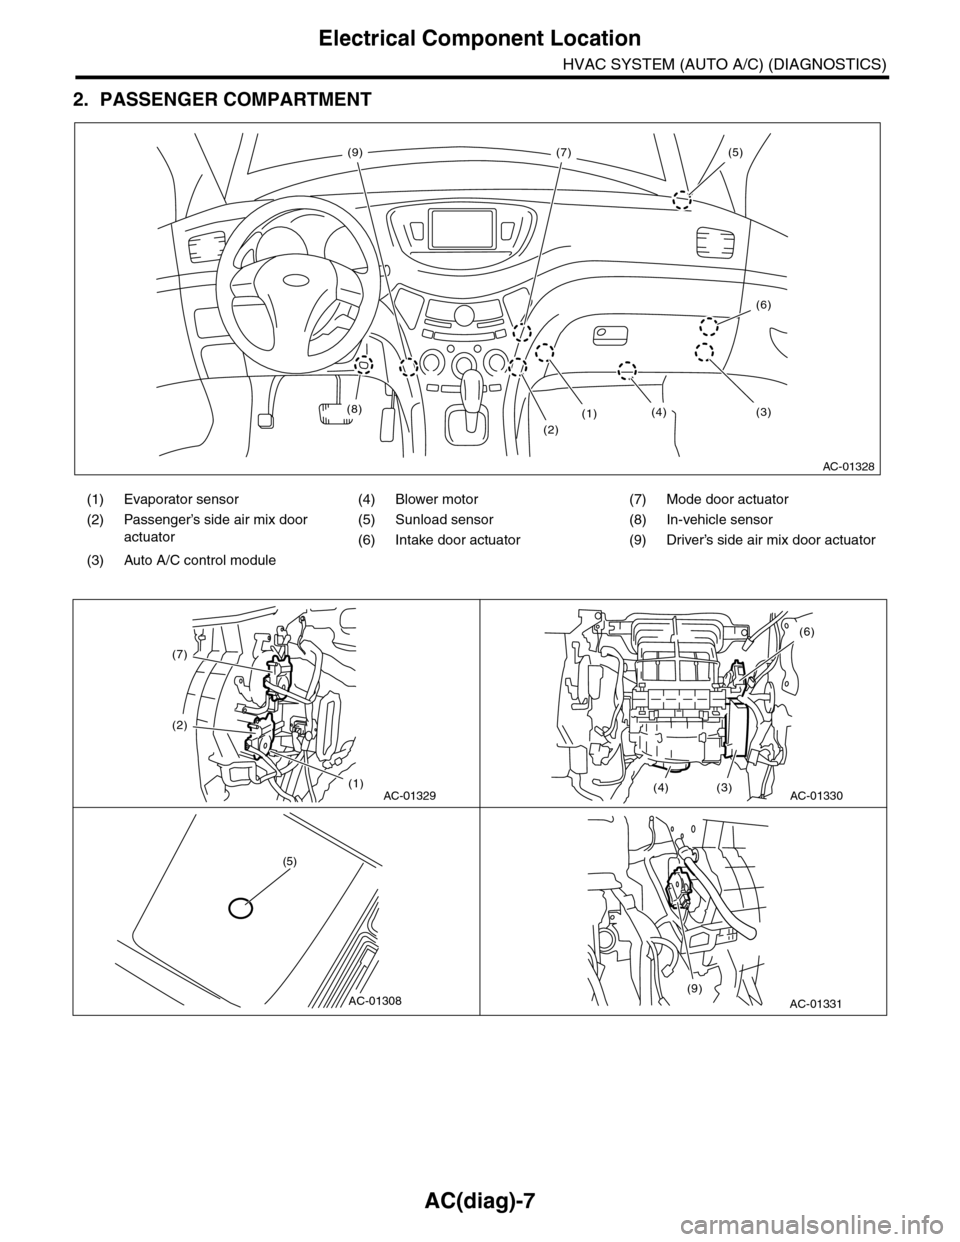 SUBARU TRIBECA 2009 1.G Service Manual PDF AC(diag)-7
Electrical Component Location
HVAC SYSTEM (AUTO A/C) (DIAGNOSTICS)
2. PASSENGER COMPARTMENT
(1) Evaporator sensor (4) Blower motor (7) Mode door actuator
(2) Passenger’s side air mix door